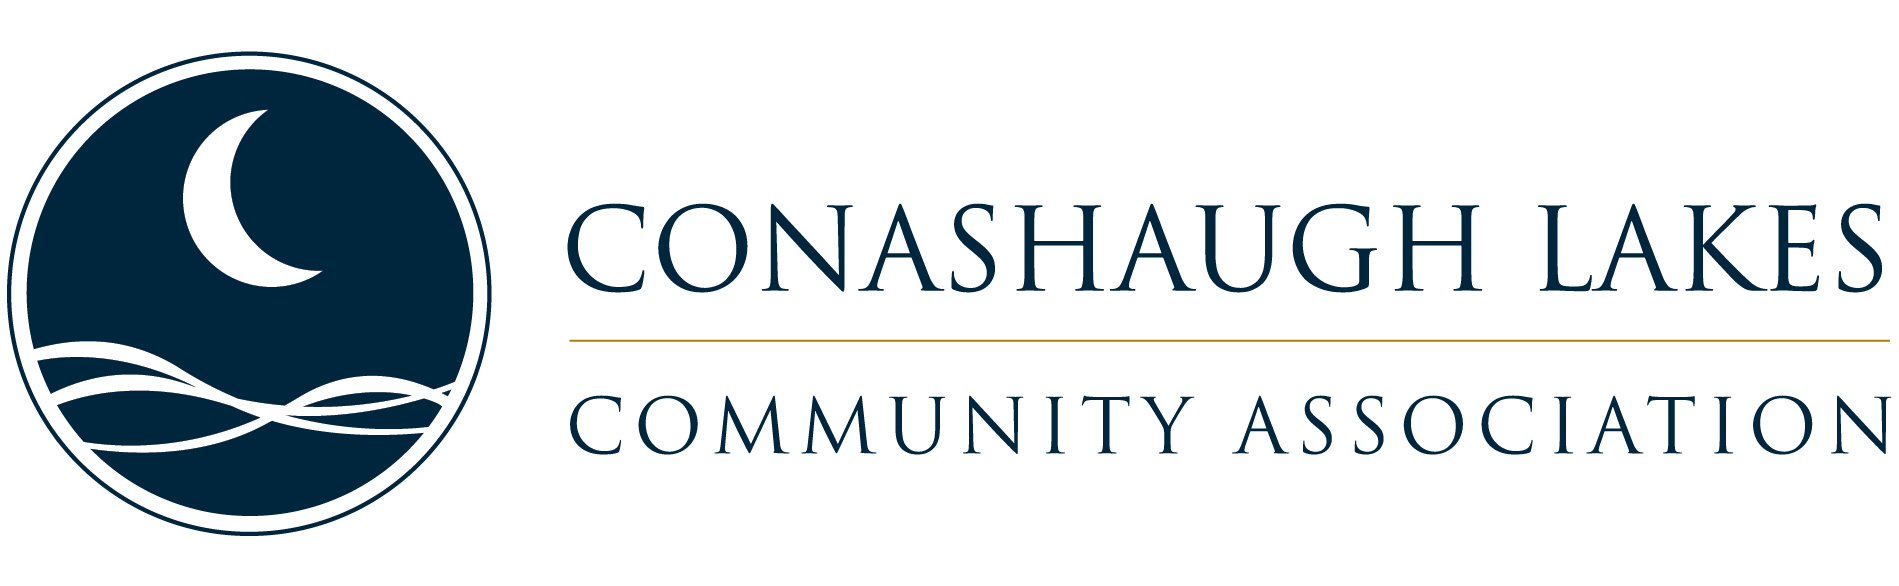 Conashaugh Lakes Community Association 